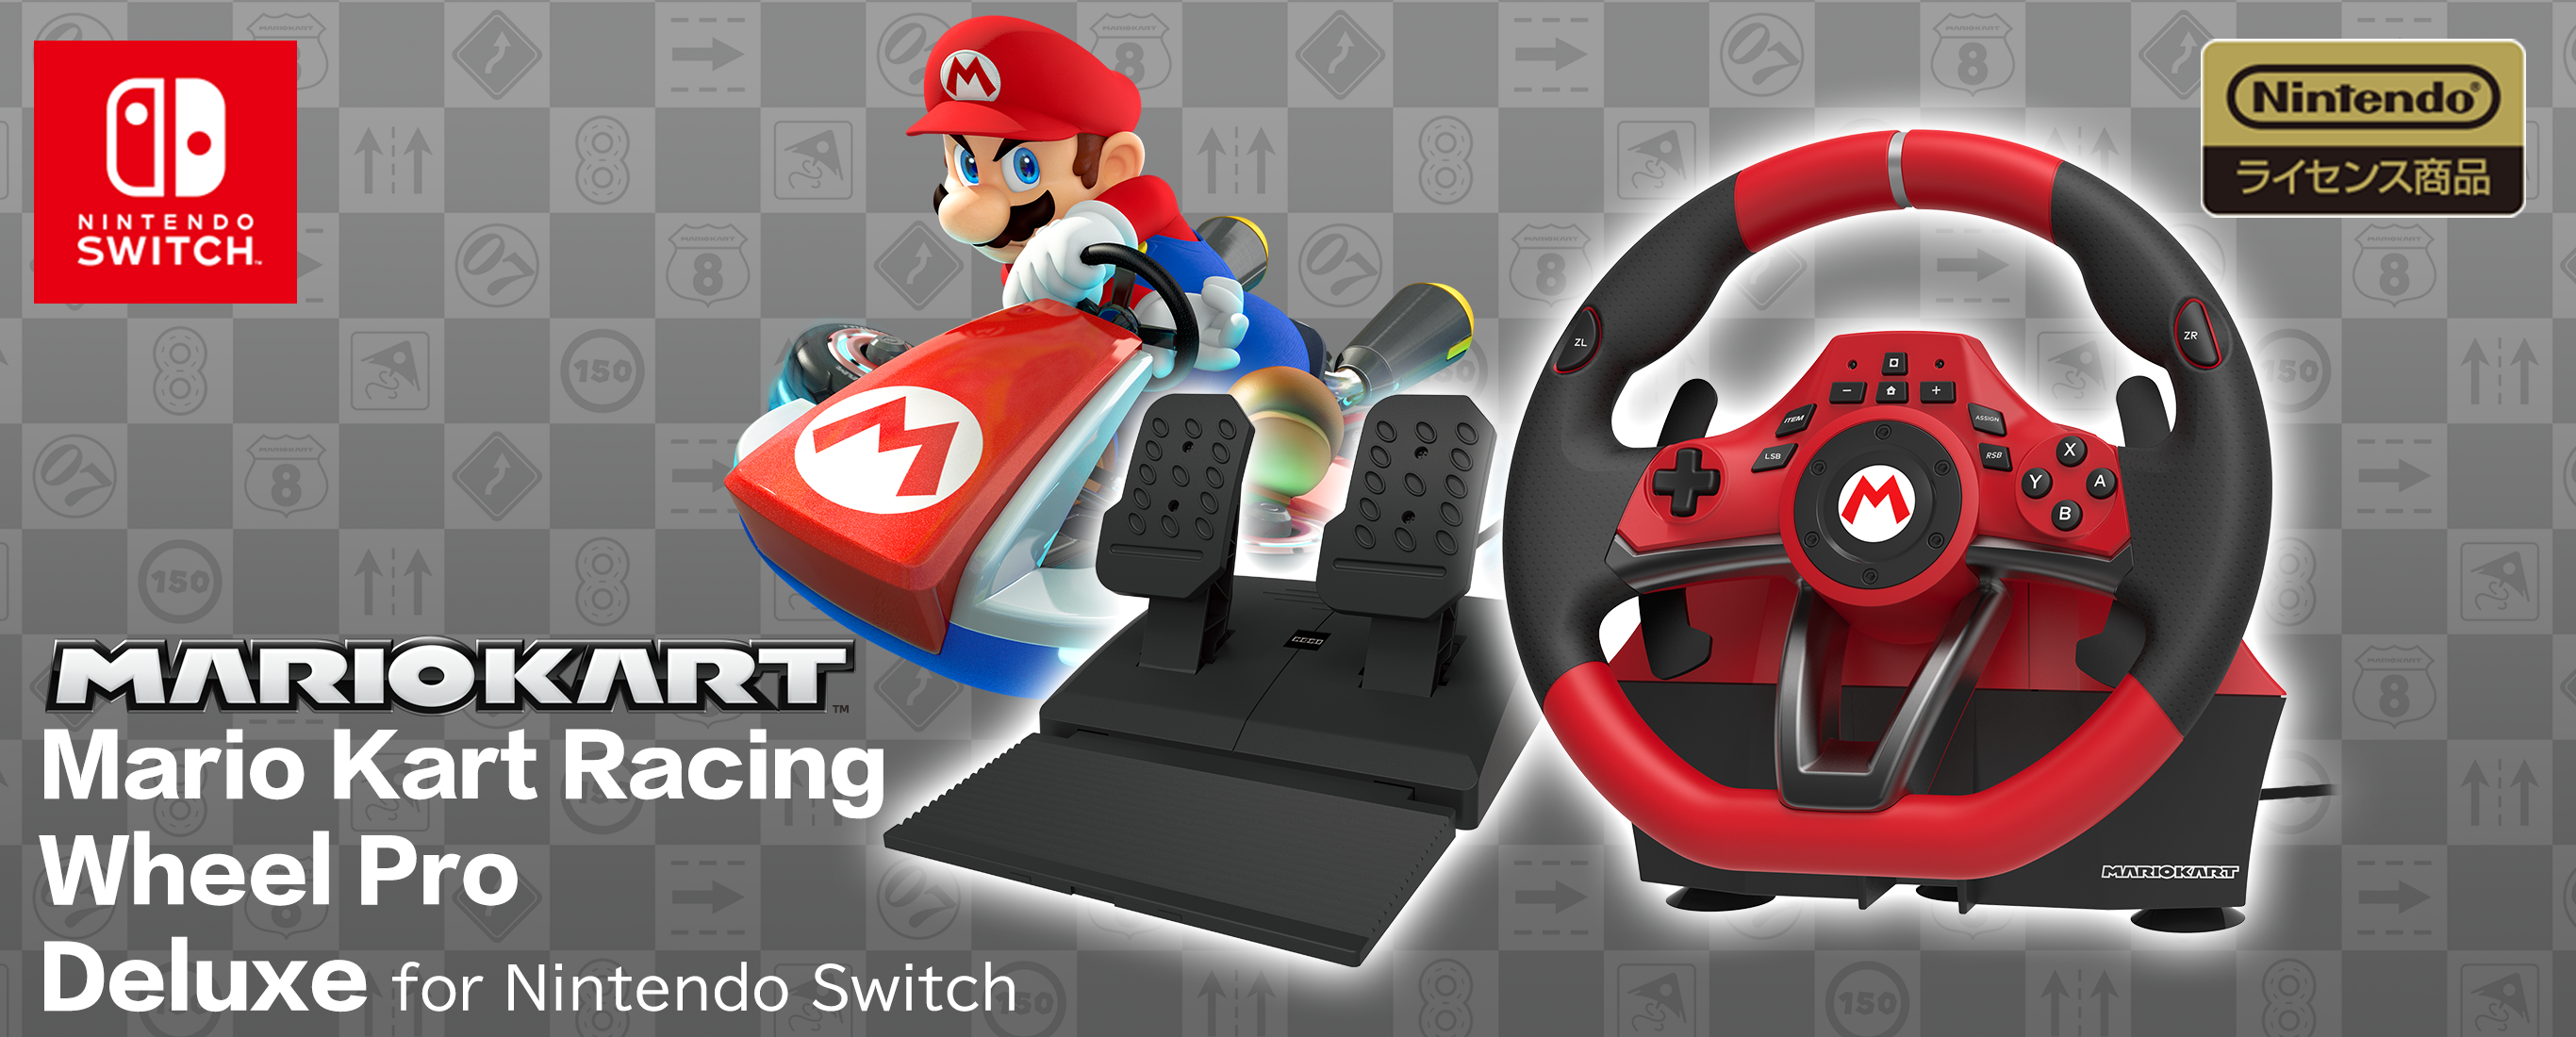 Kirken I de fleste tilfælde Bliver til 株式会社 HORI | Mario Kart Racing Wheel Deluxe for Nintendo Switch